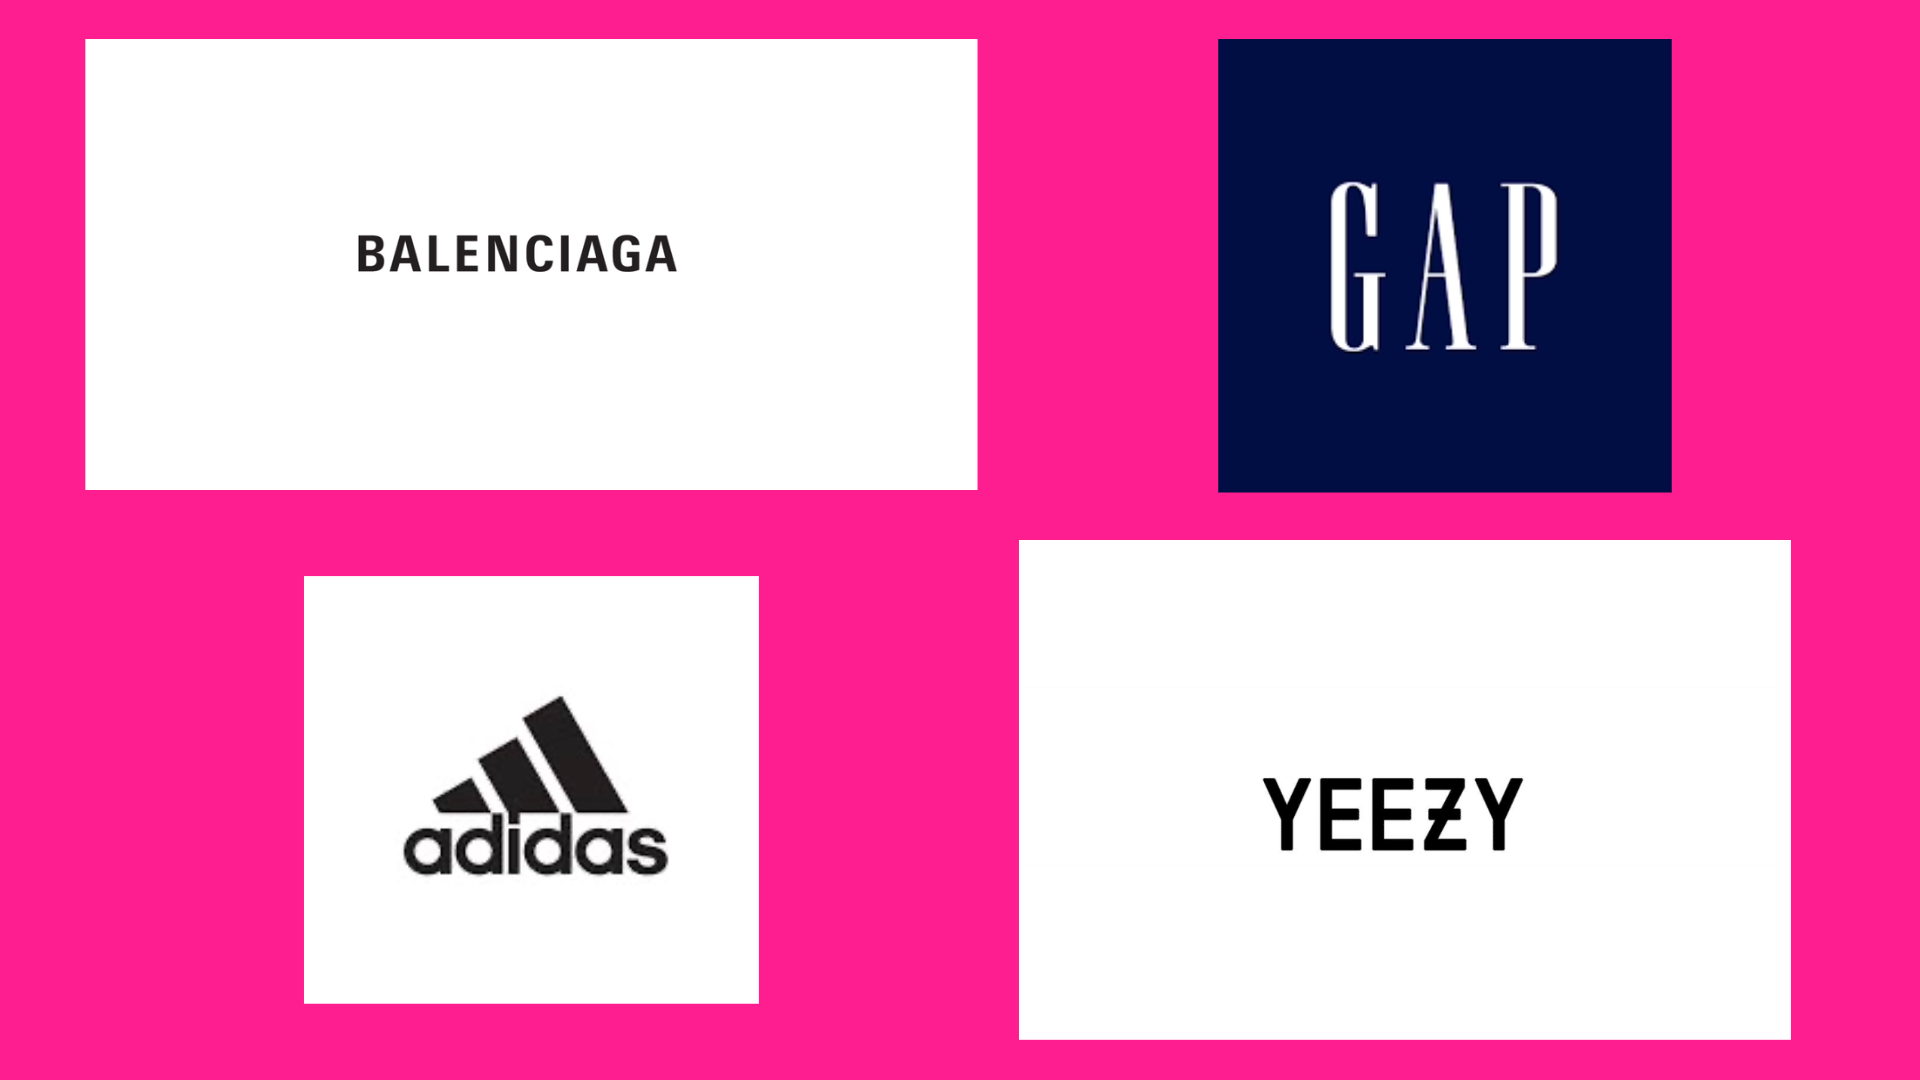 Logos for Balenziaga, Adidas, Gap and Yeezy